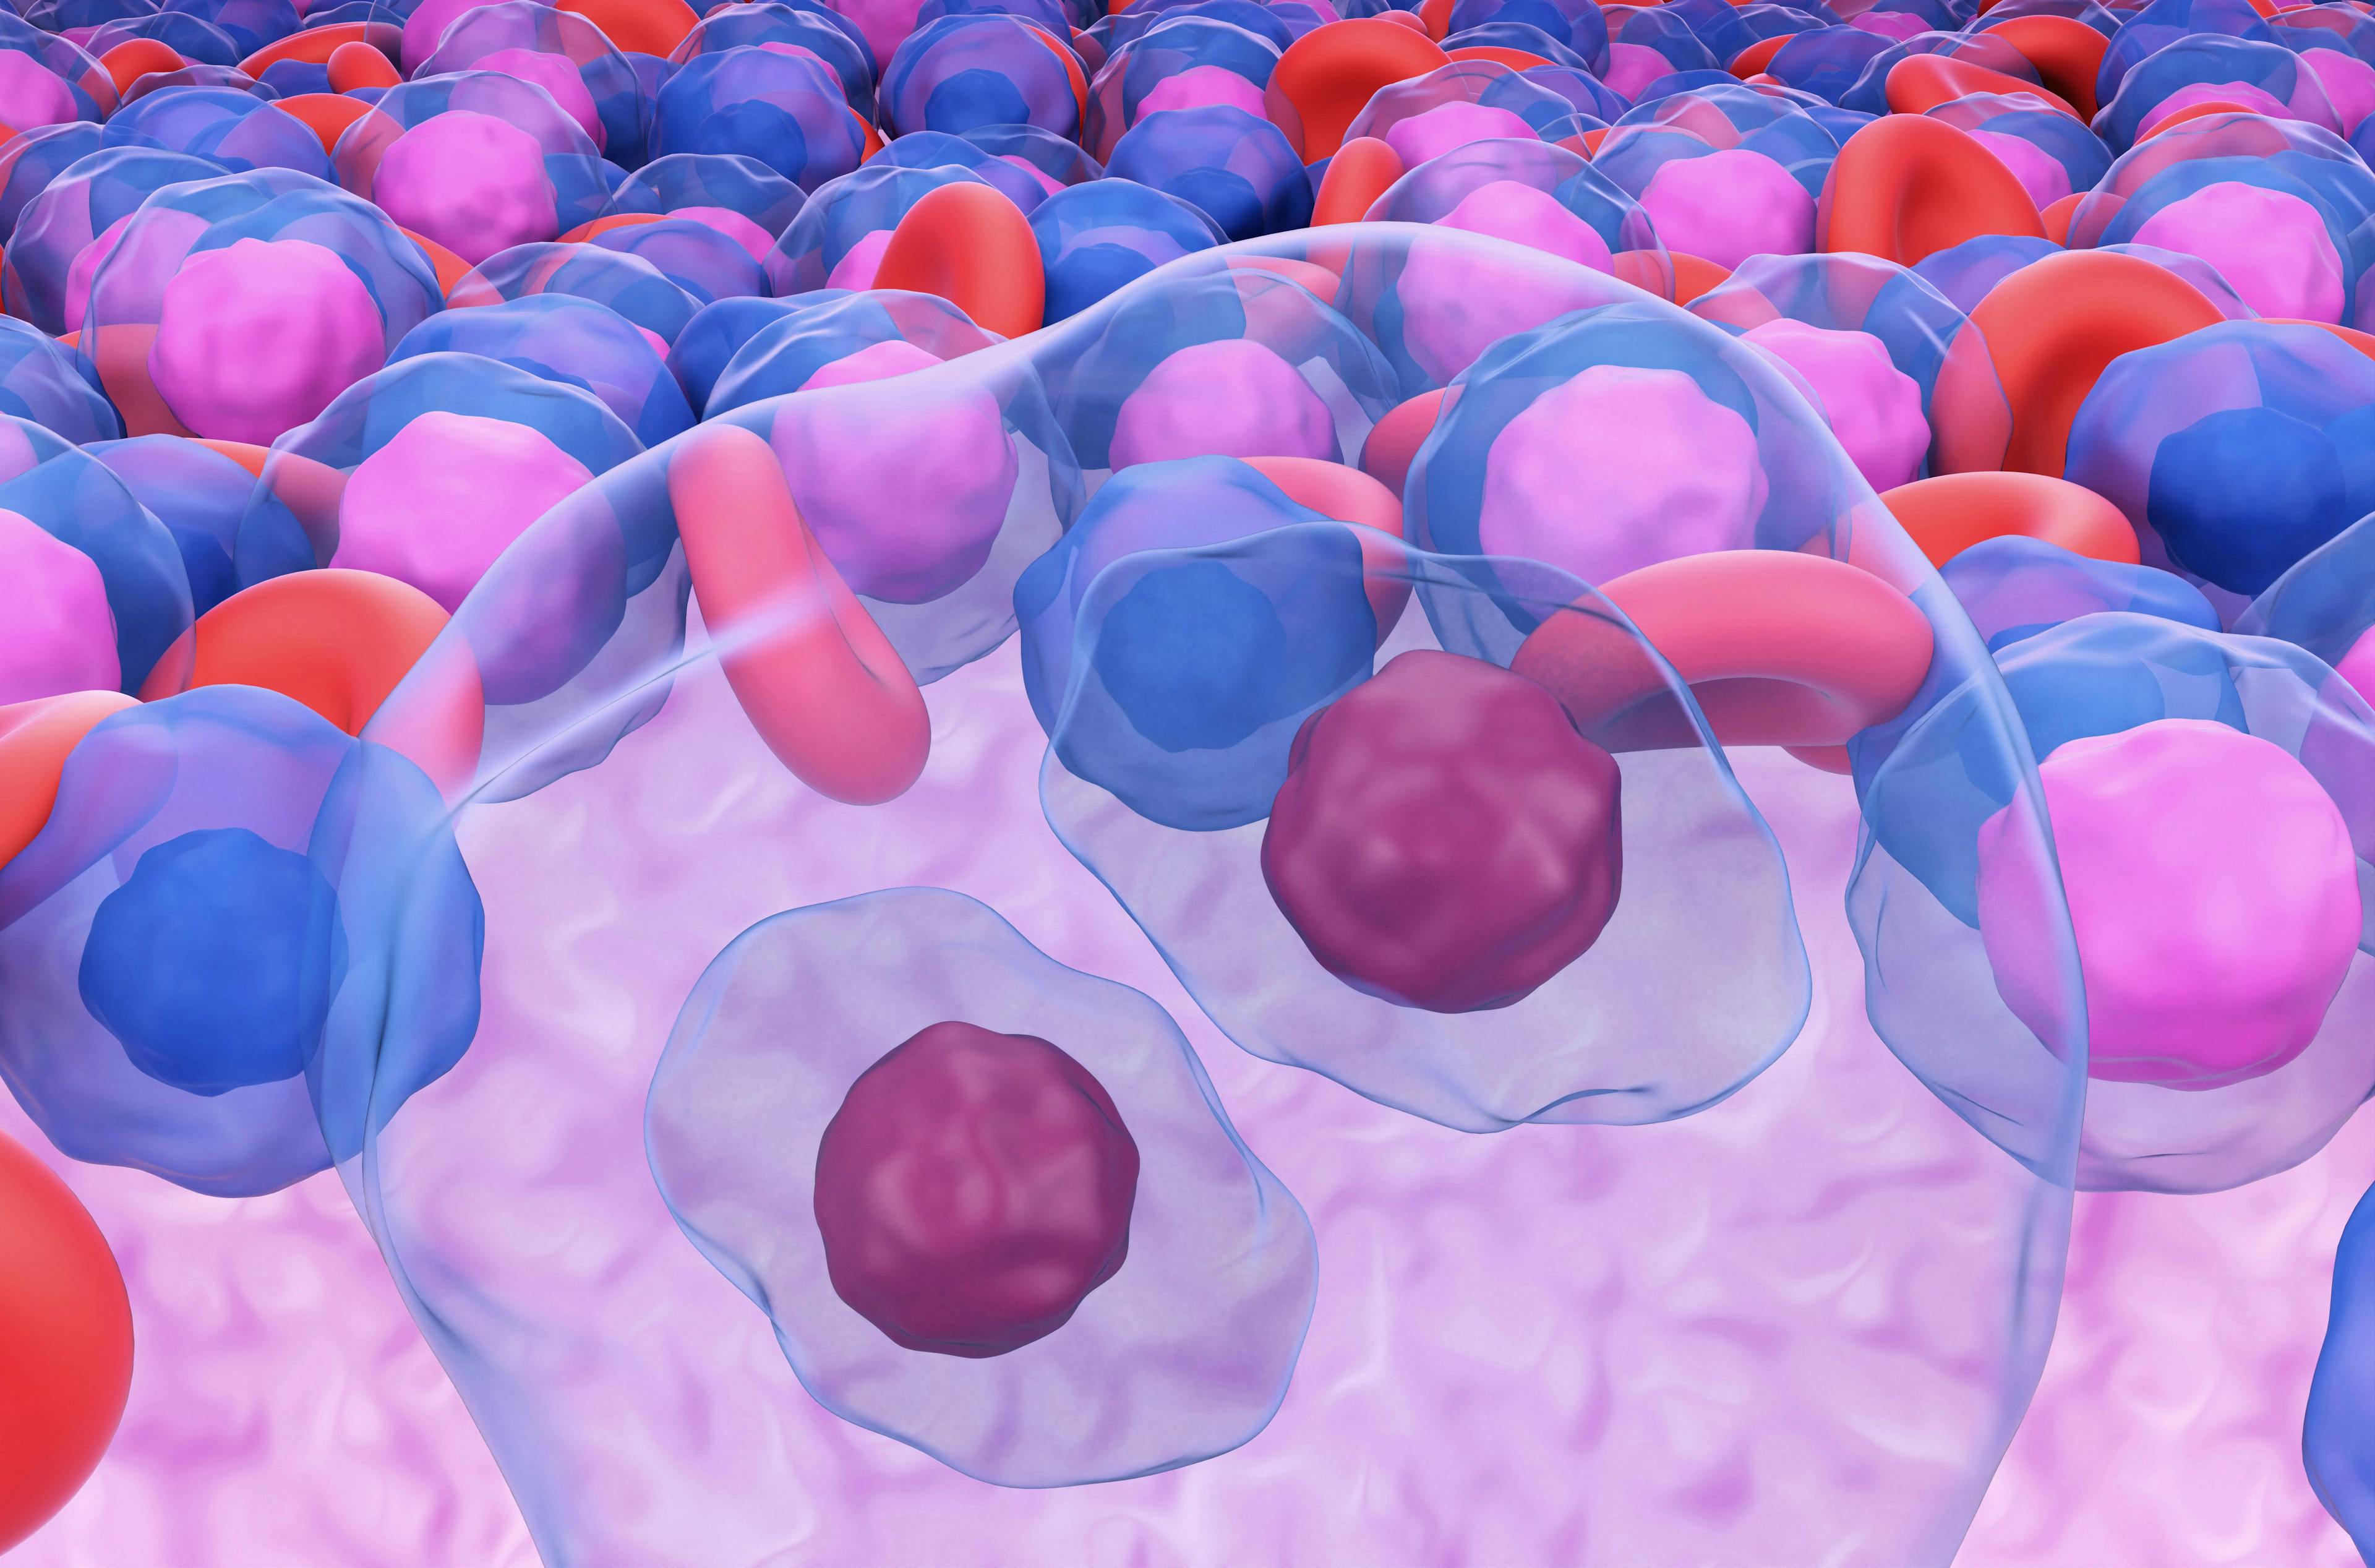 Reed-Sternberg cell in hodgkin lymphoma closeup view 3d render illustration